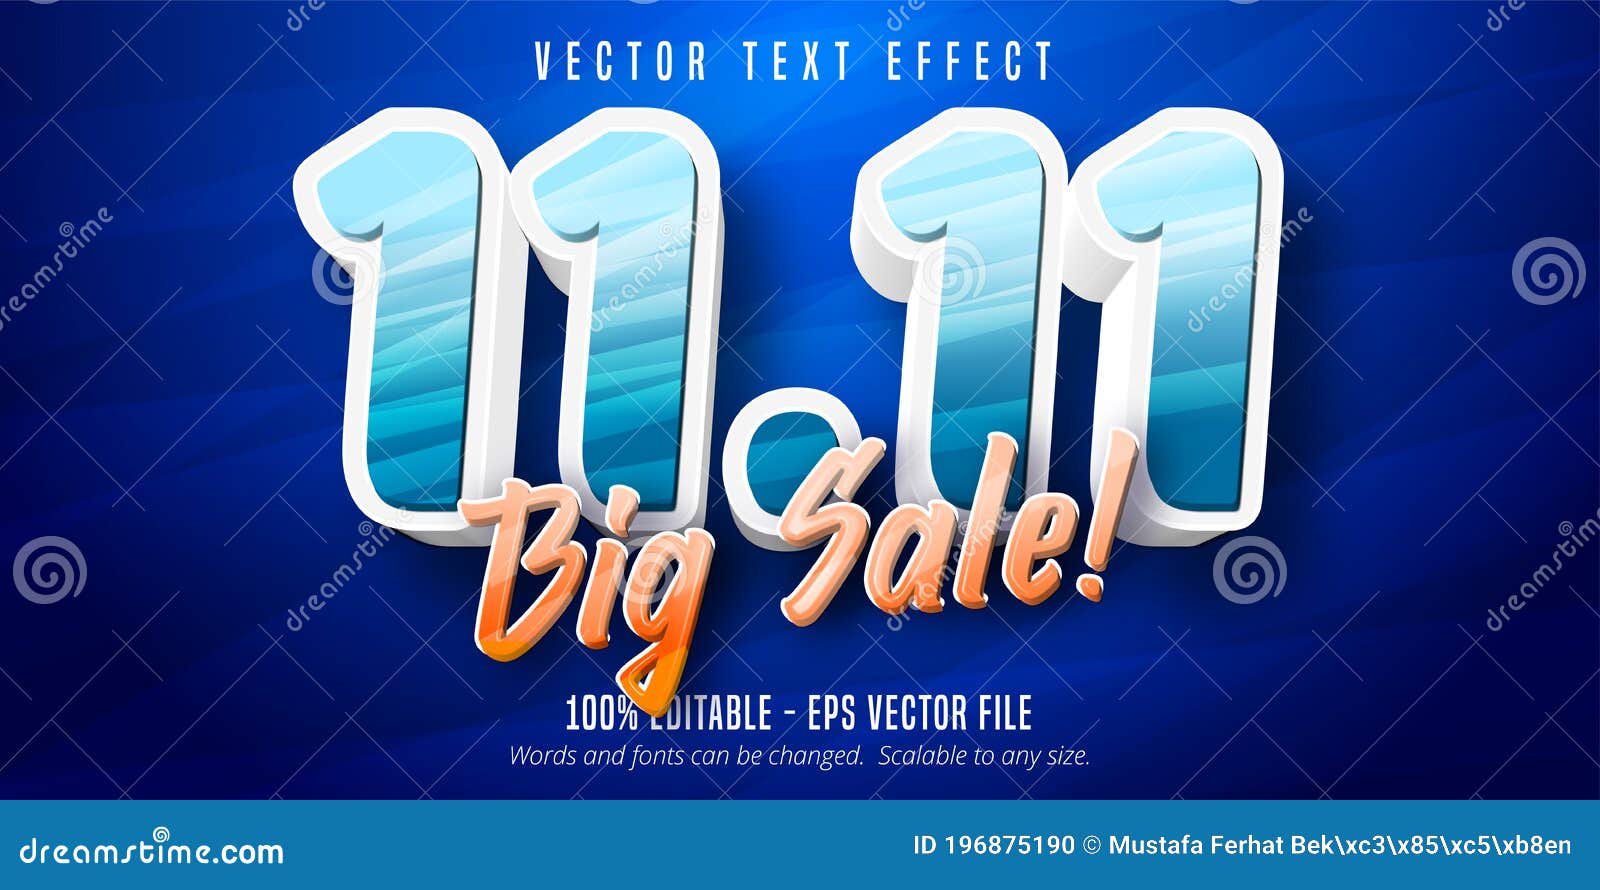 11.11 big sale text, singles day cartoon style editable text effect